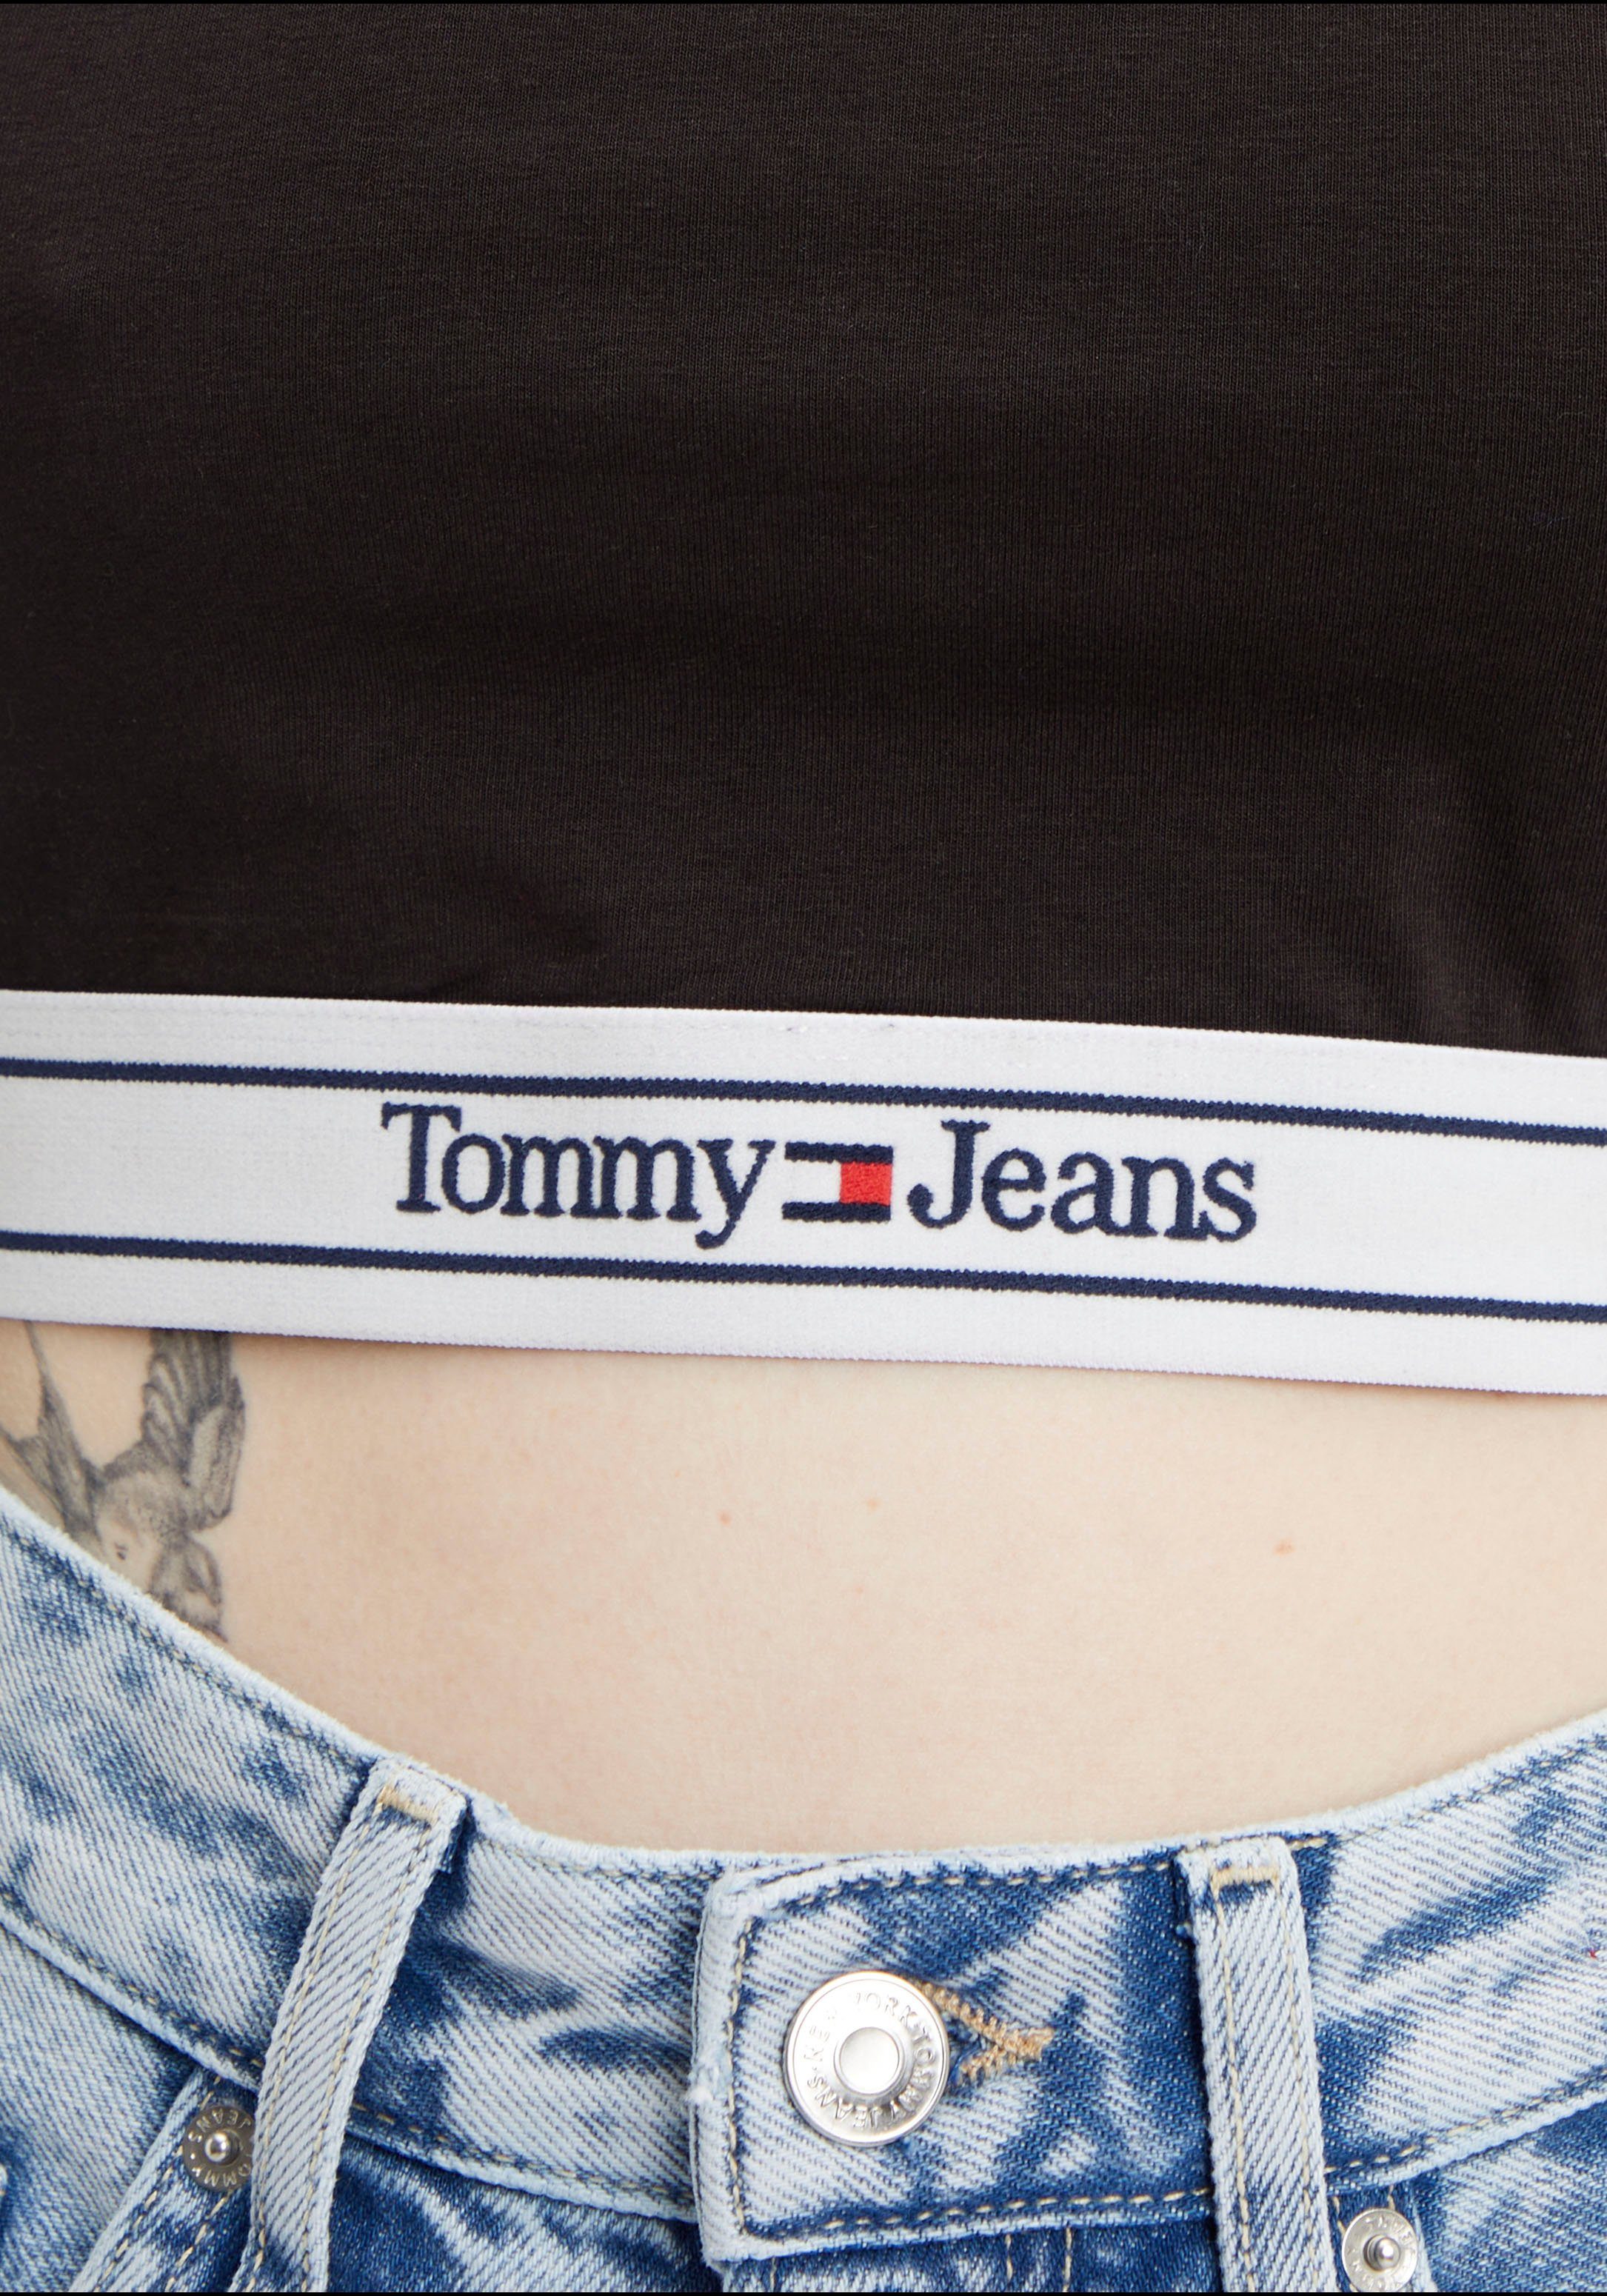 LOGO Jeans Black TOP Tommy LS Cut-Out WB Tommy Wäschebund Jeans & mit Langarmshirt TJW